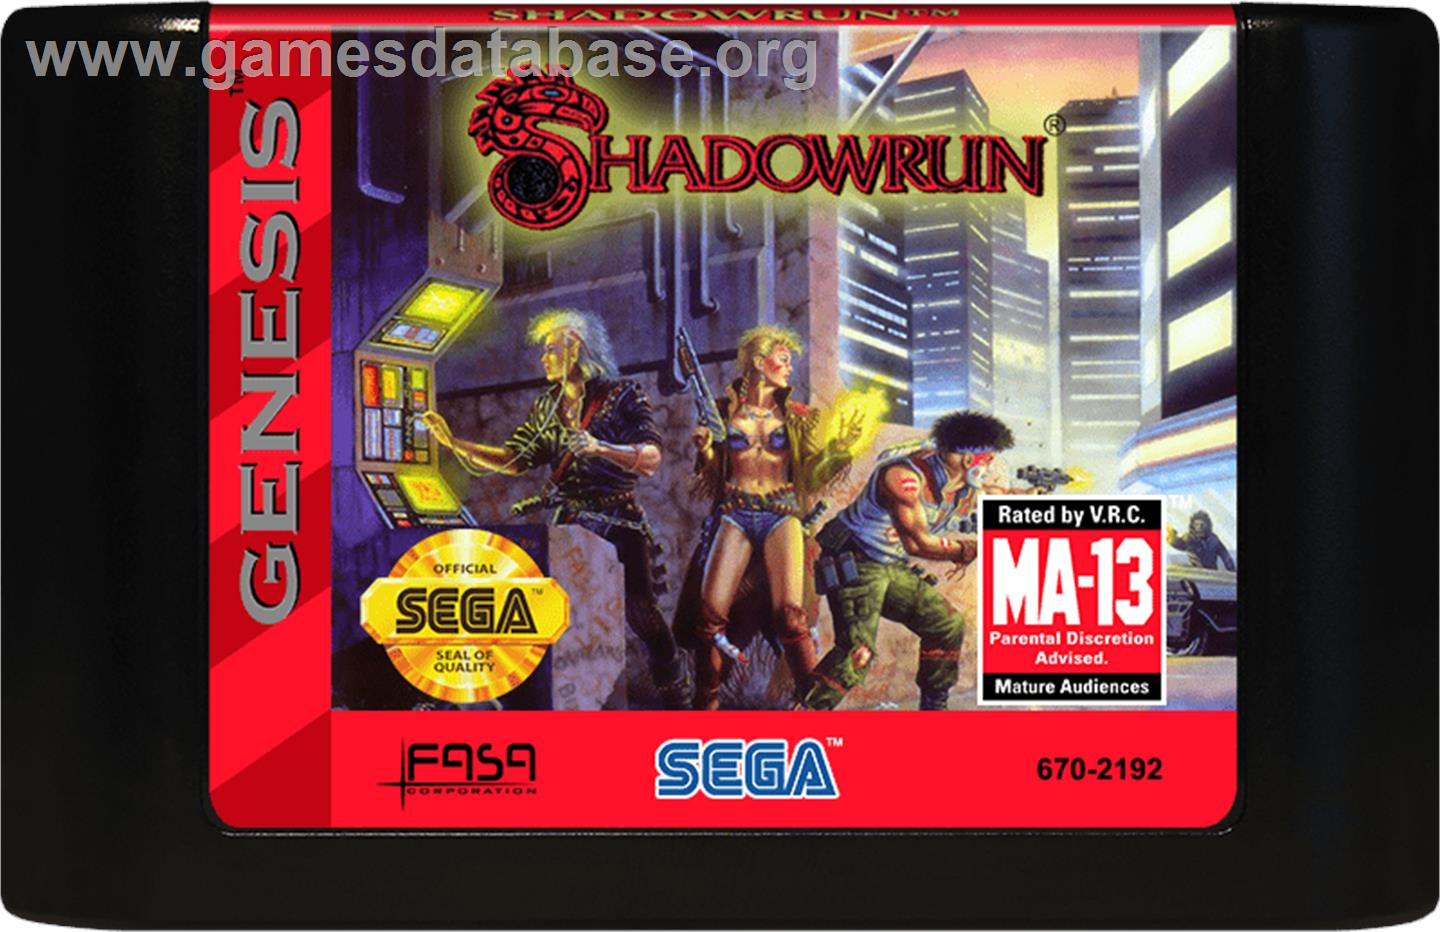 Shadowrun - Sega Genesis - Artwork - Cartridge